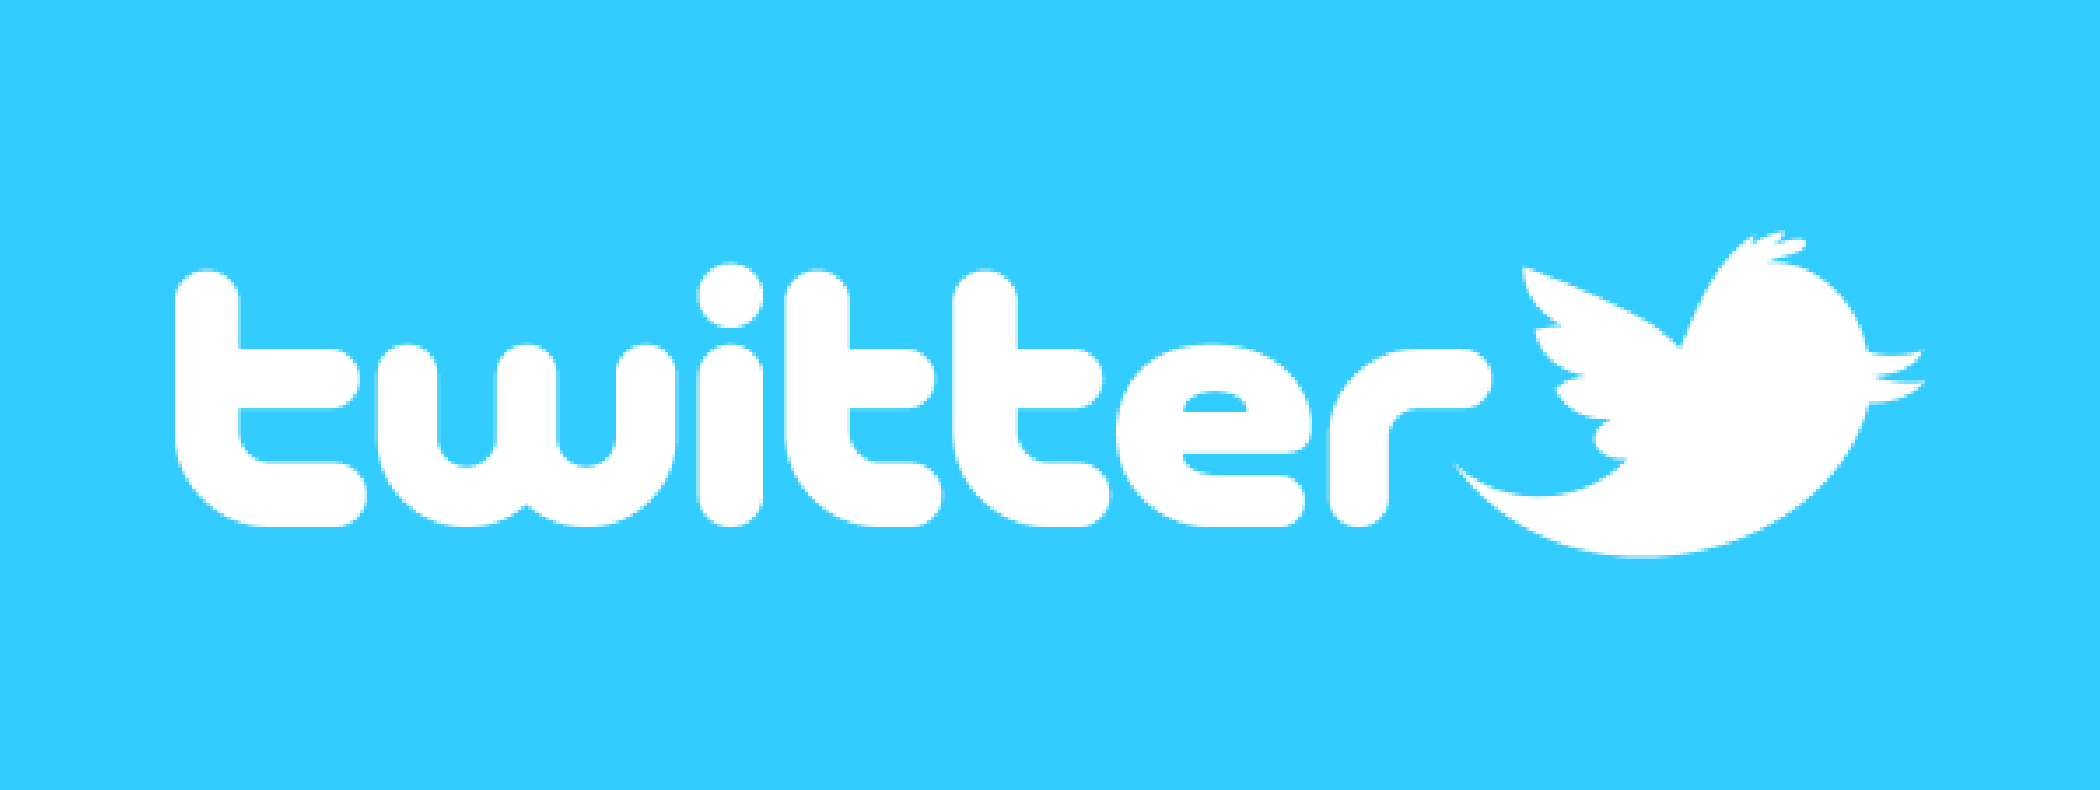 twitter-logo_1.png